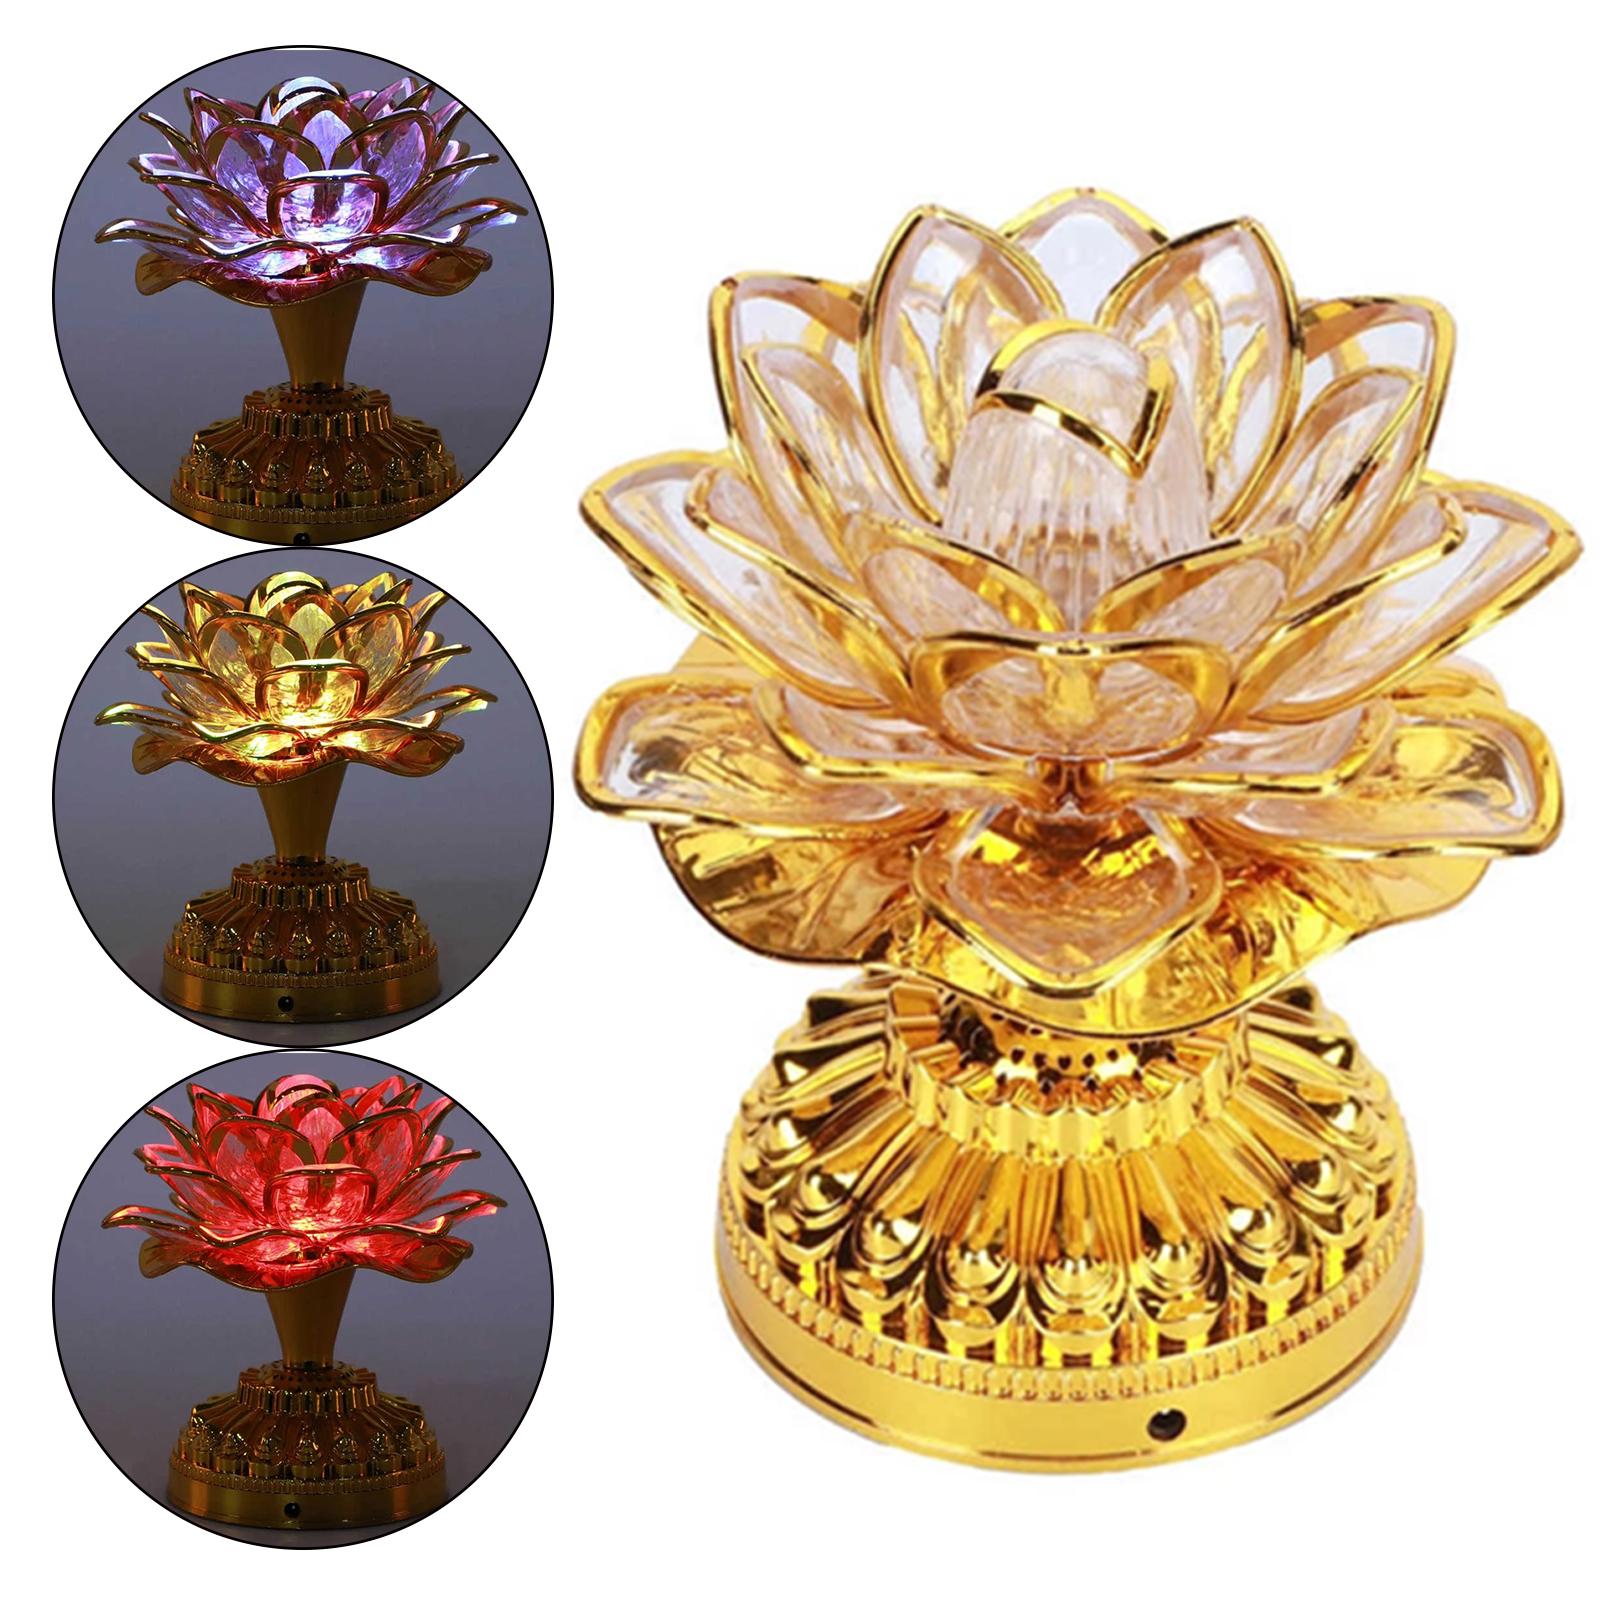 Portable Lotus Lamp Buddha Lotus Light for Temple Home Decor with music